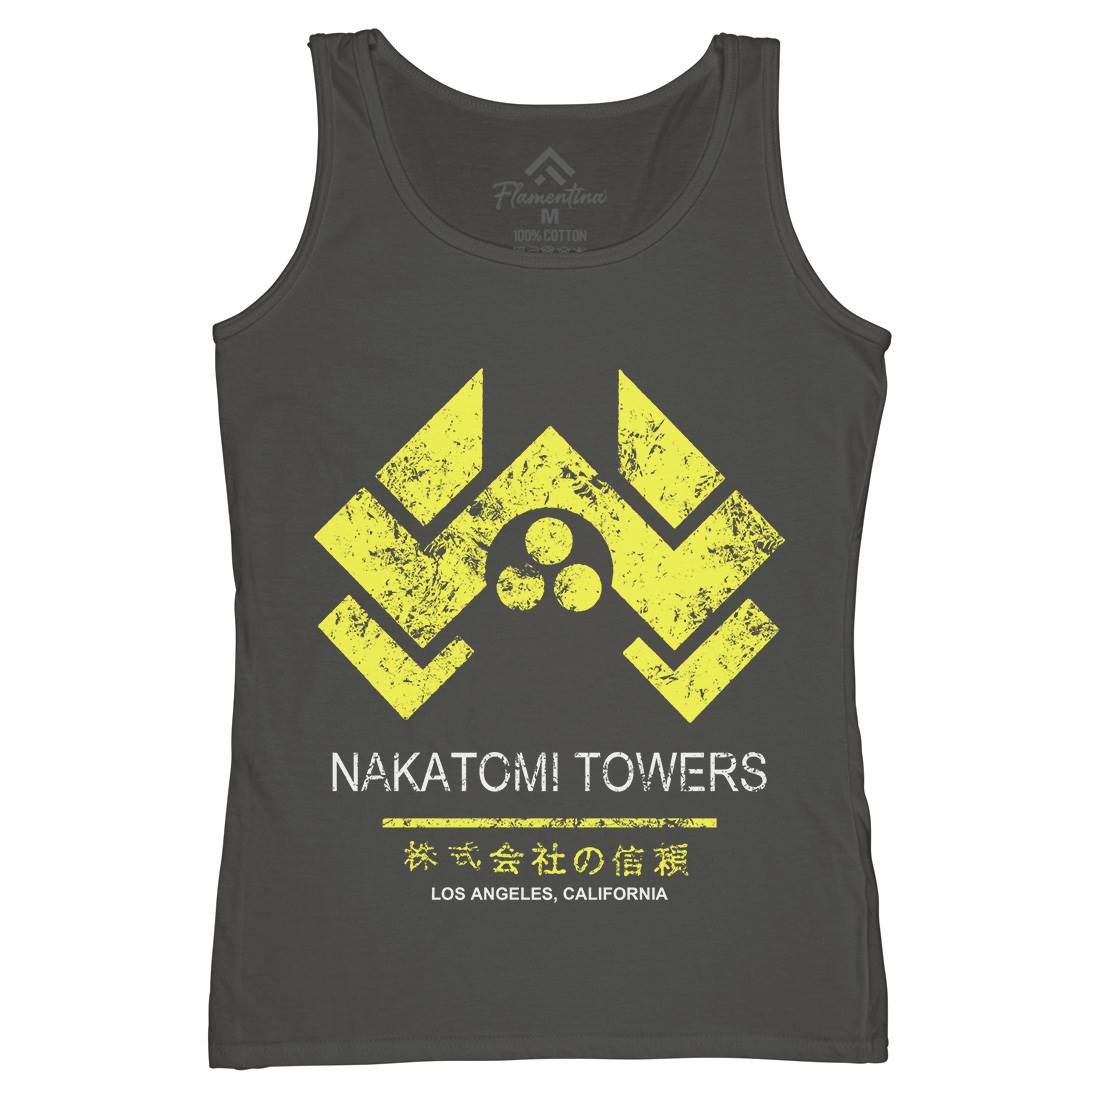 Nakatomi Tower Womens Organic Tank Top Vest Retro D430